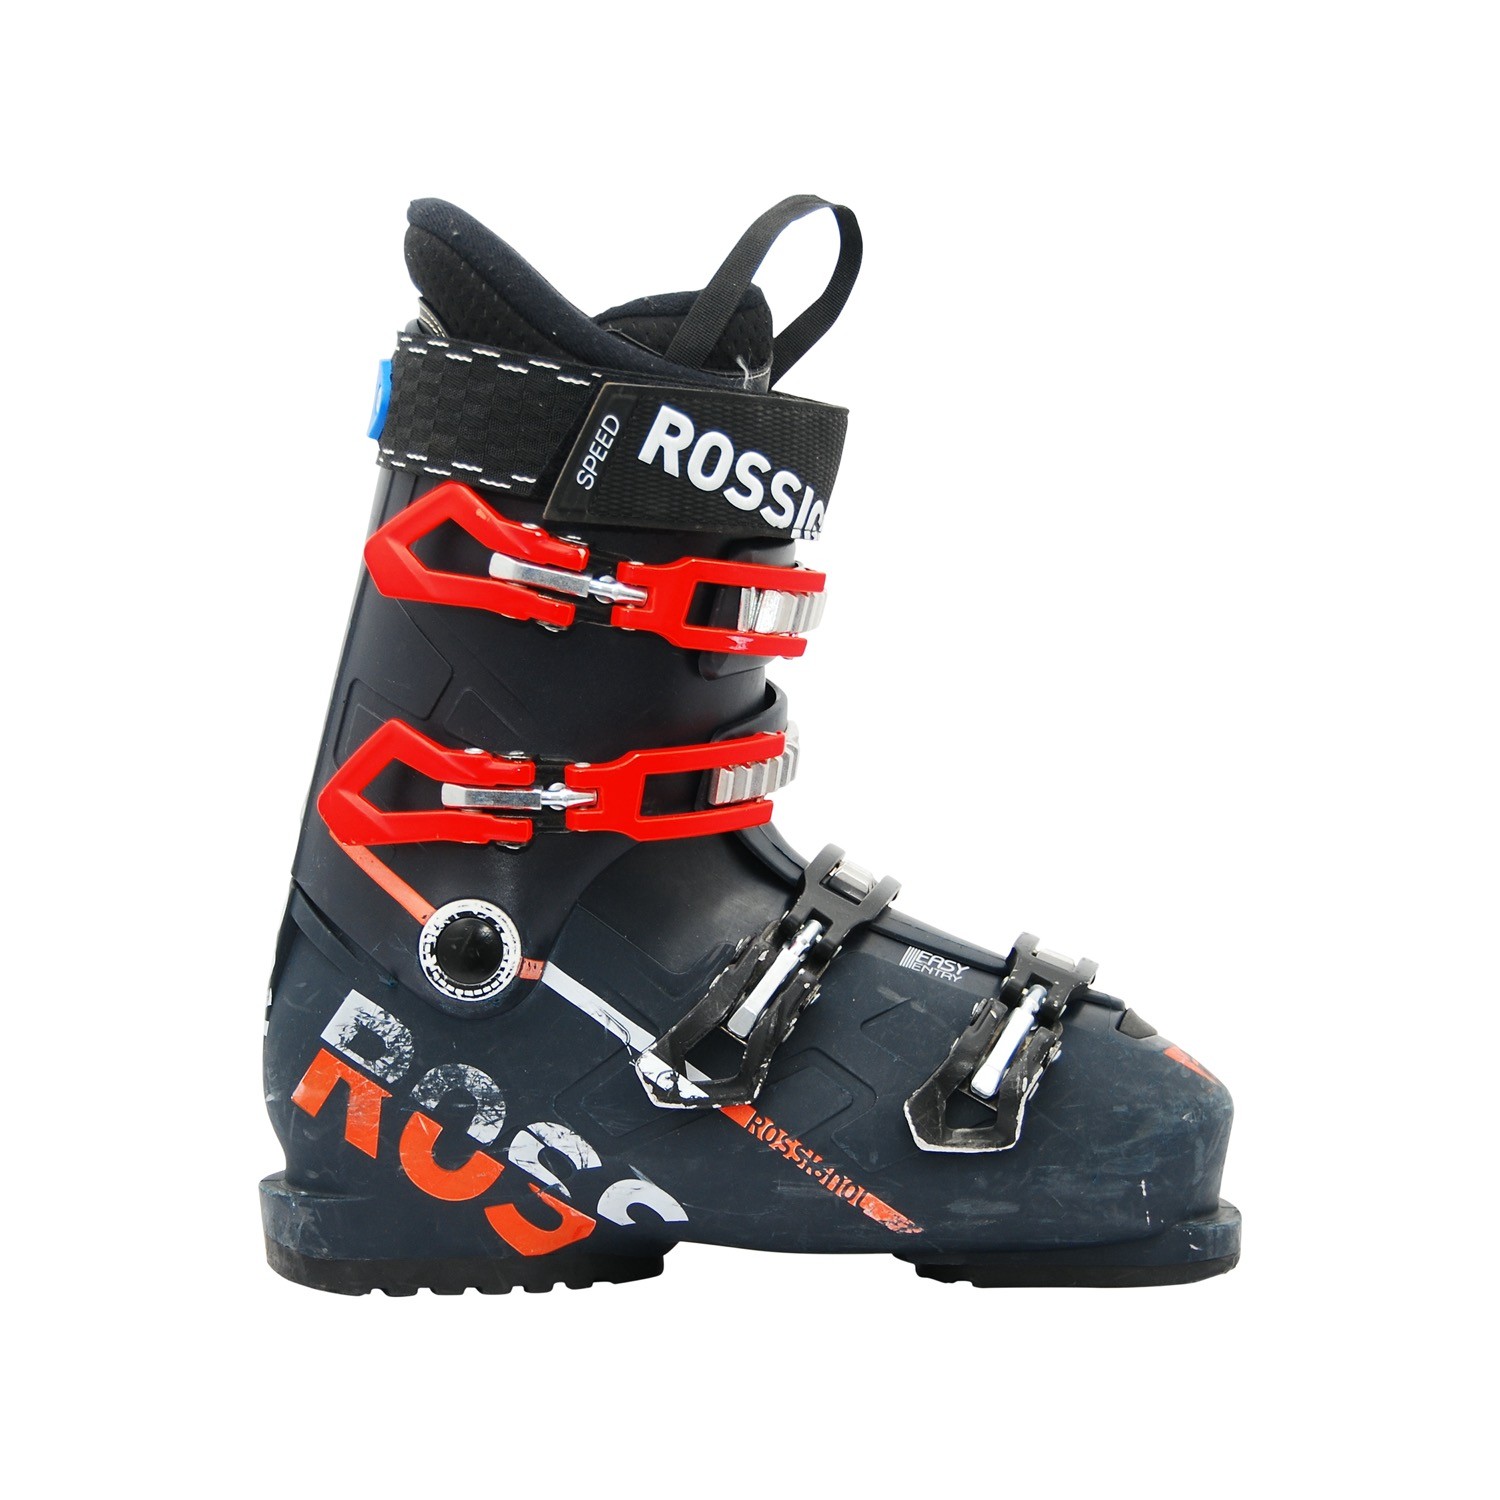 Chaussure de ski Occasion Rossignol Alias rouge Qualité A 46/29.5MP 